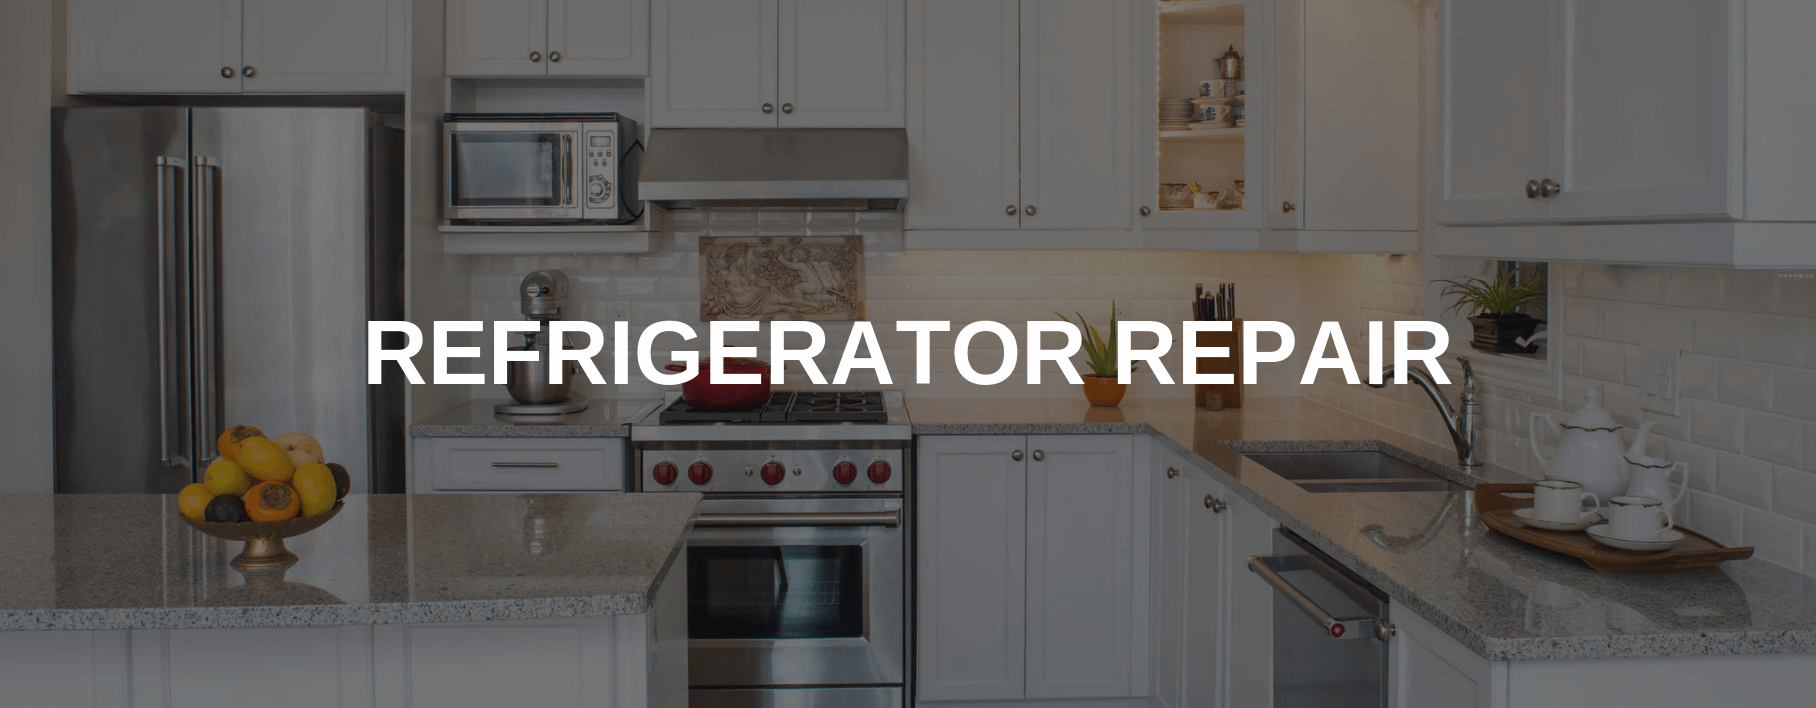 refrigerator repair city st